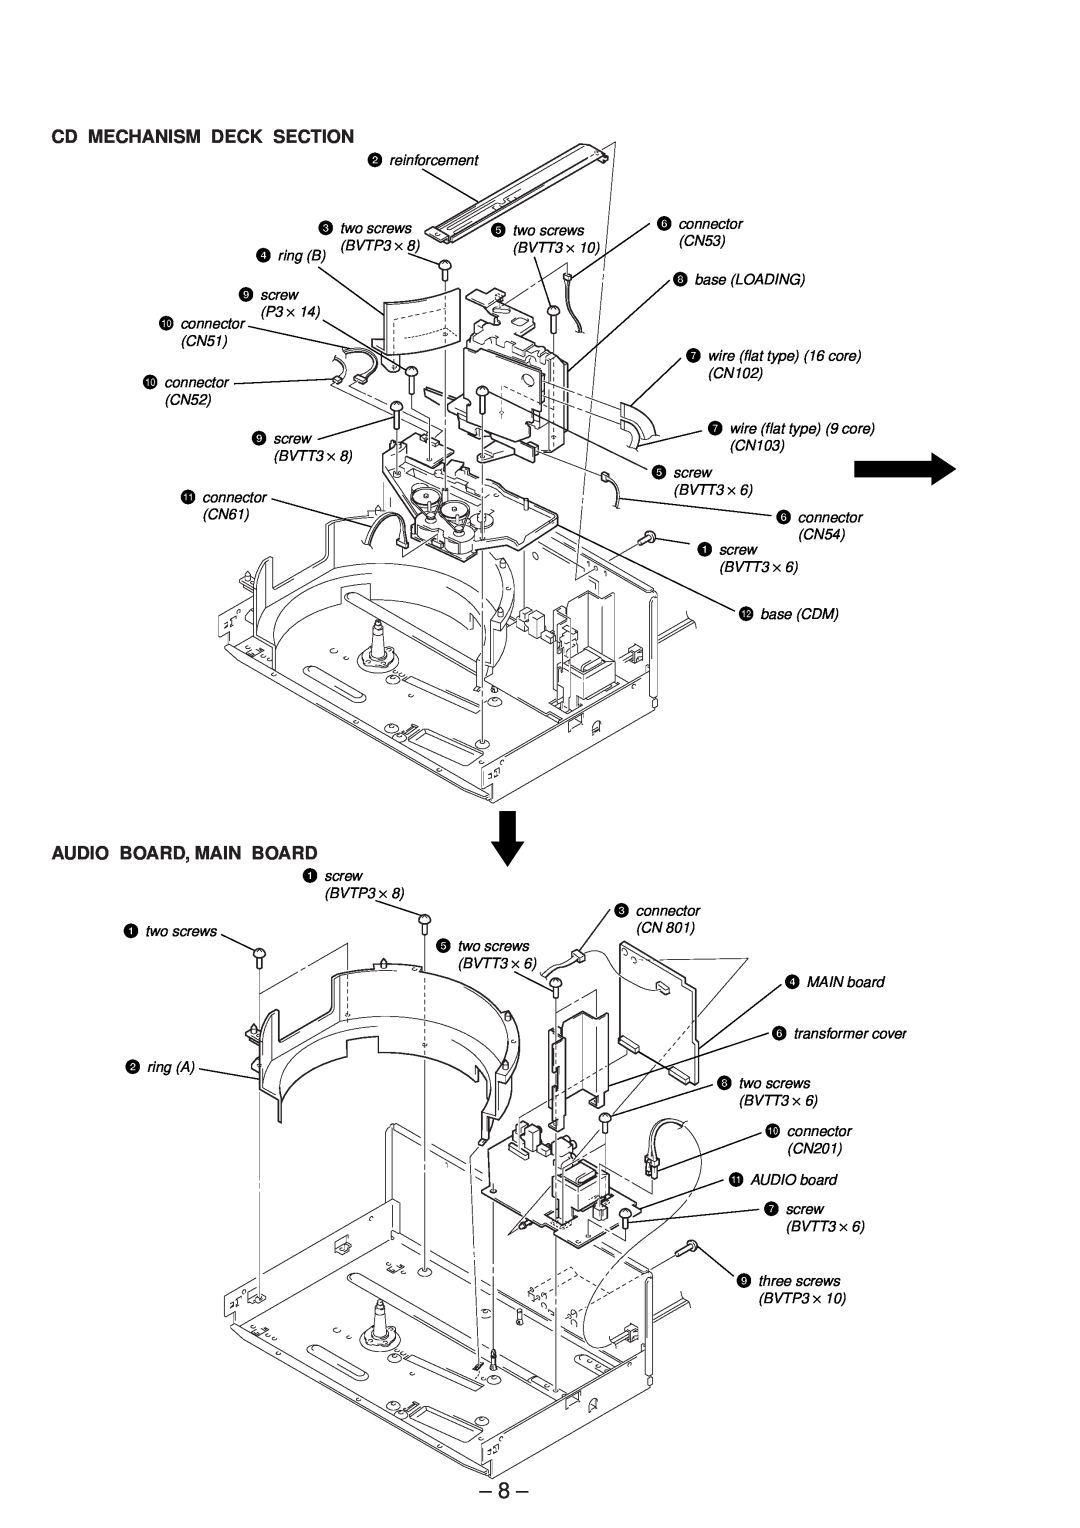 Technicolor - Thomson CDP-CX57 service manual Cd Mechanism Deck Section, Audio Board, Main Board 